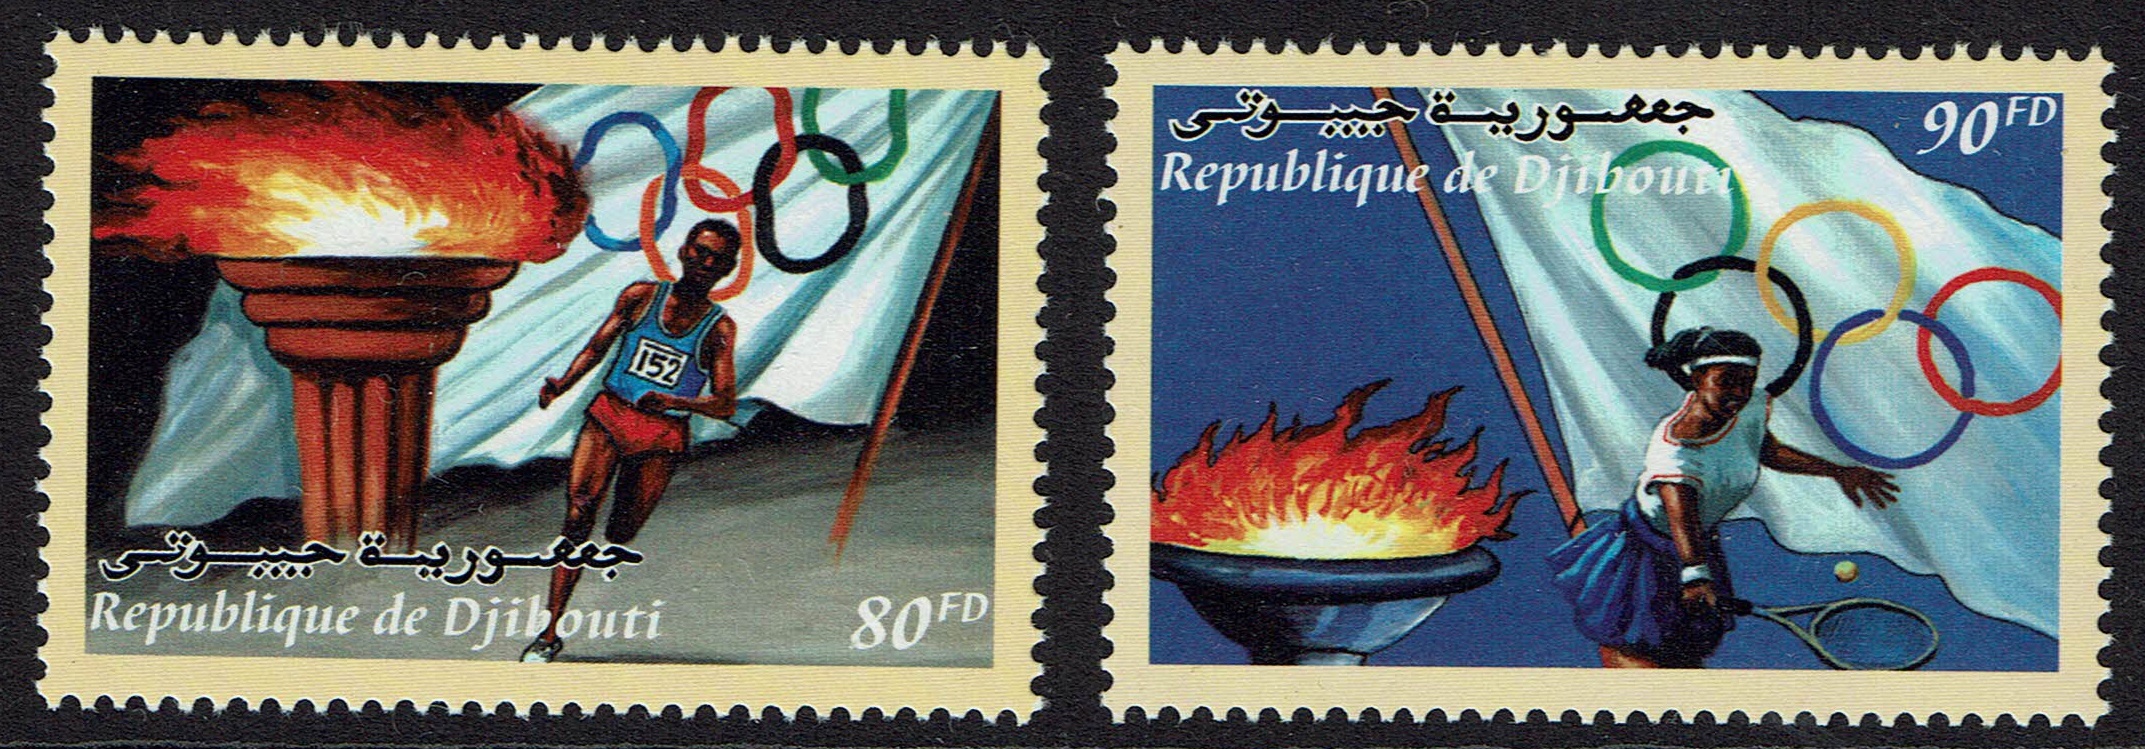 Djibouti Olympic Stamps